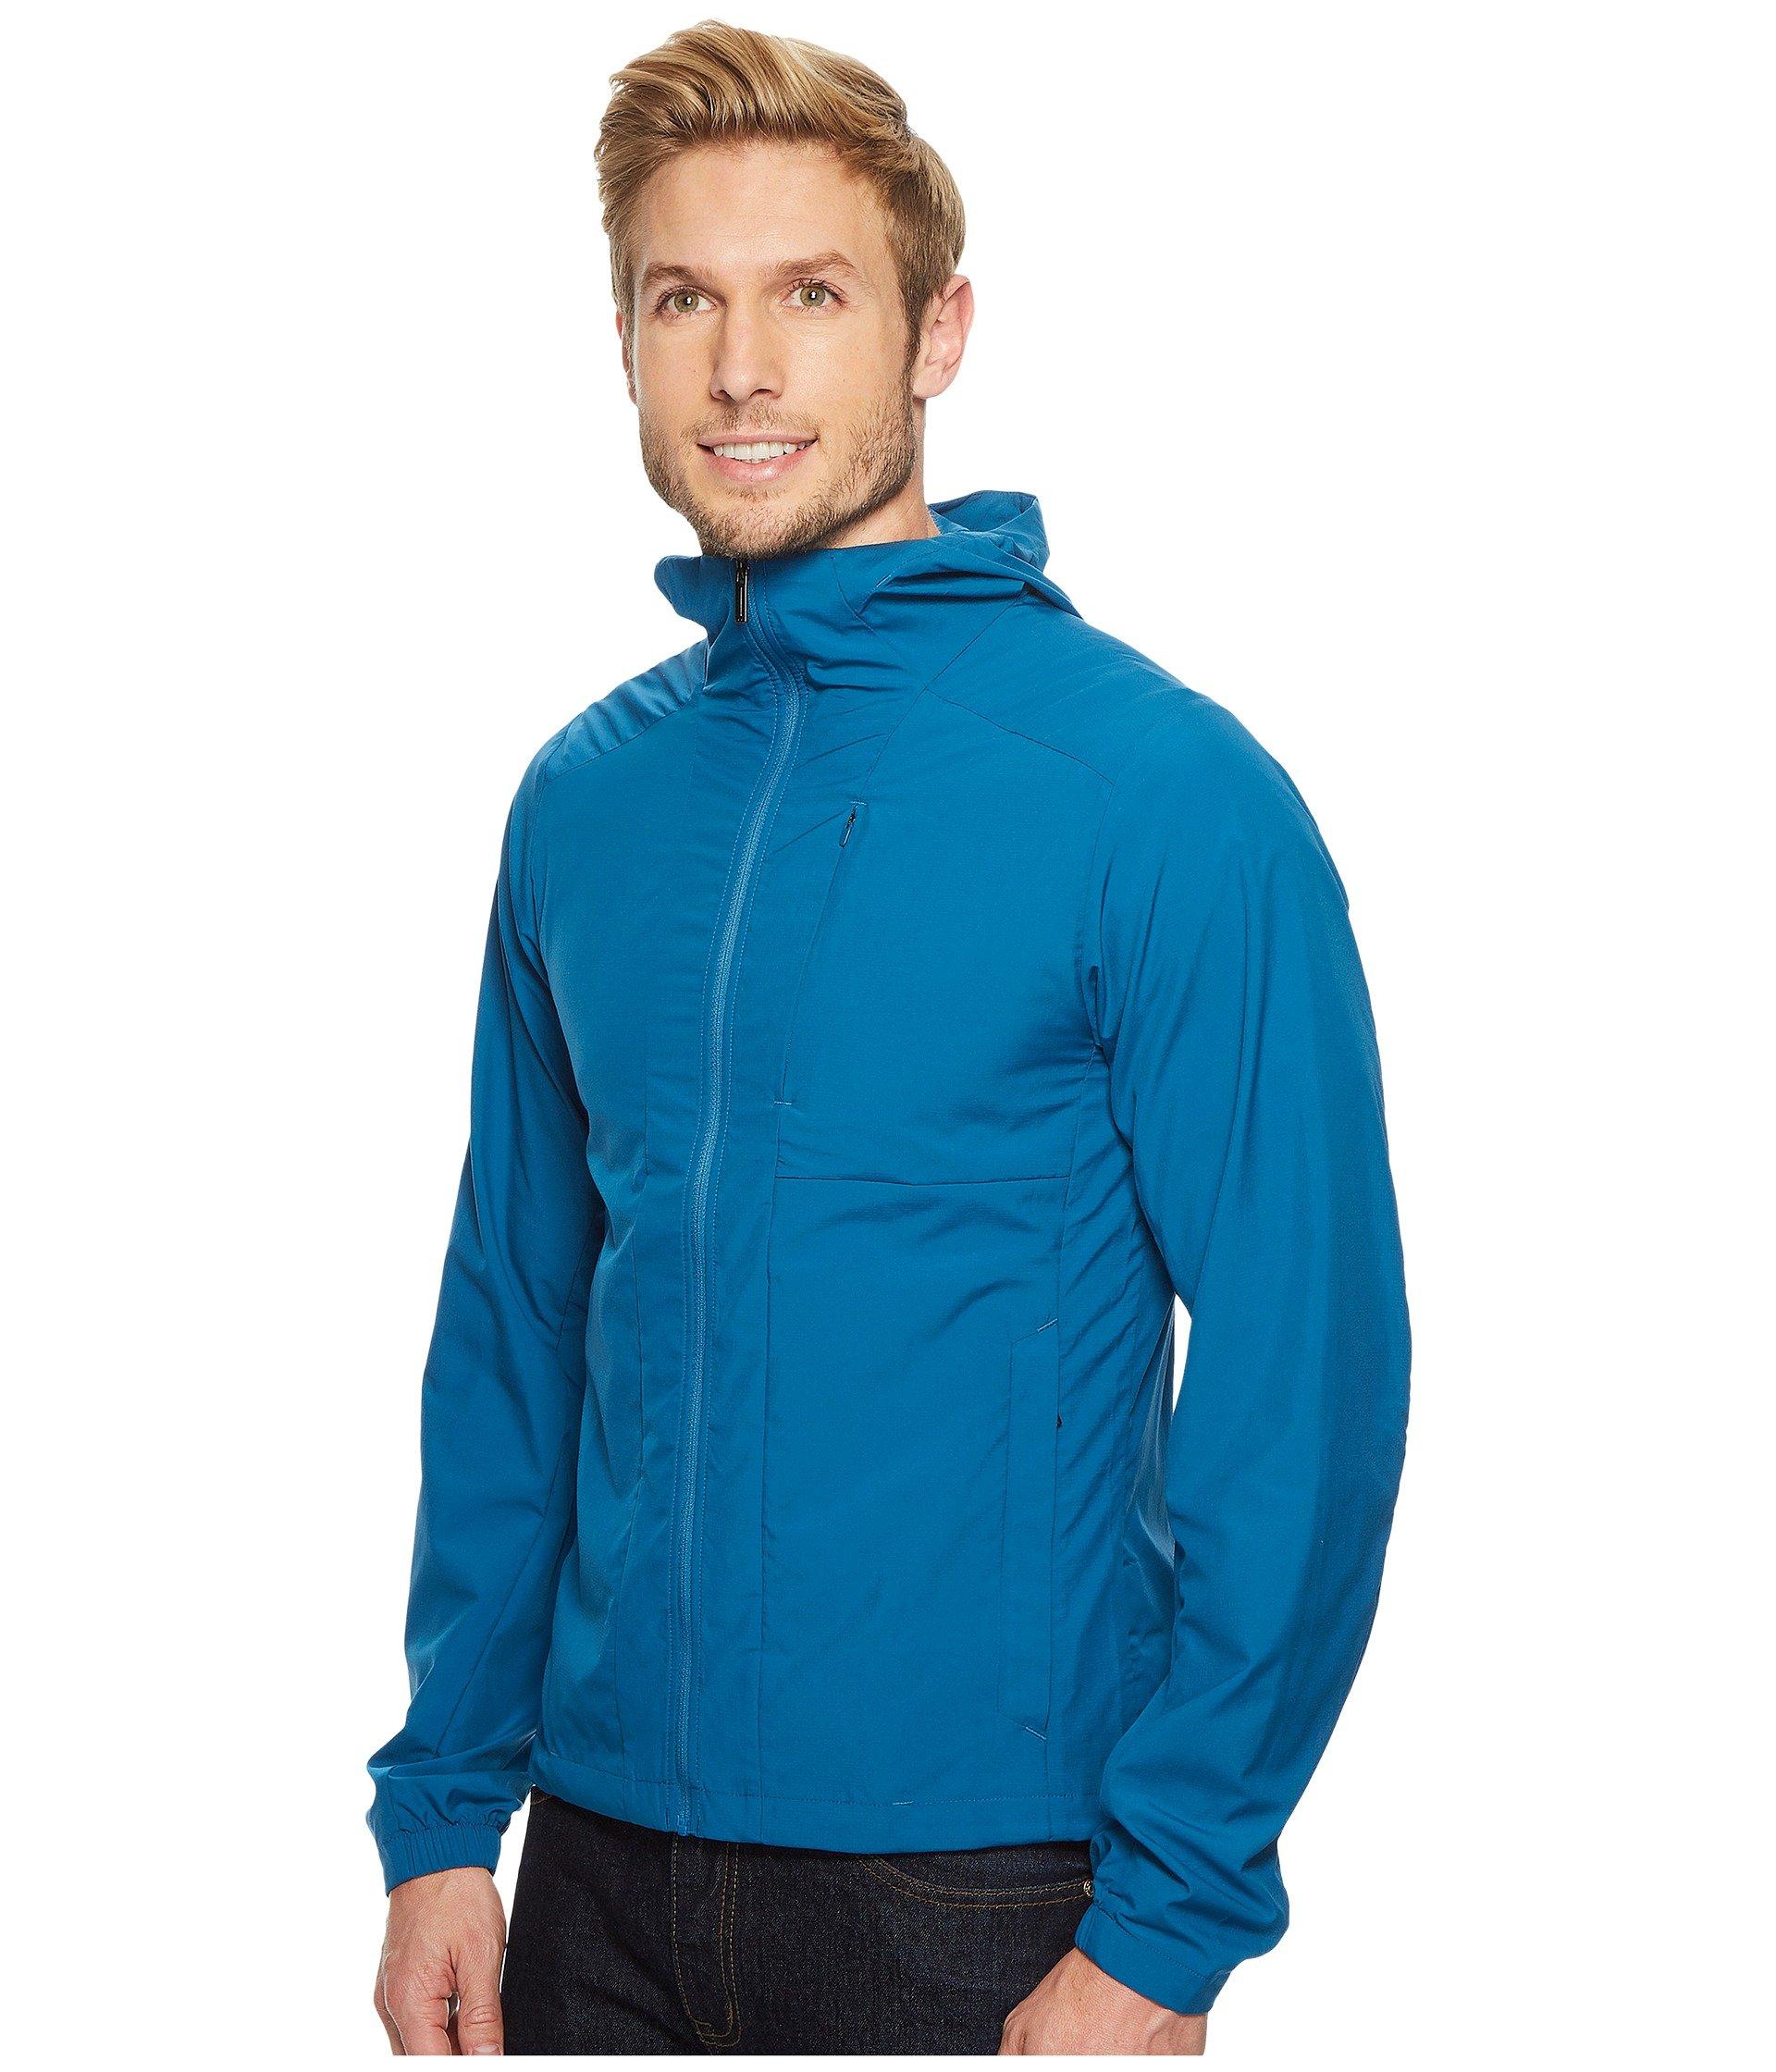 Nau Synthetic Slight Jacket in Khaki (Blue) for Men - Save 40% - Lyst